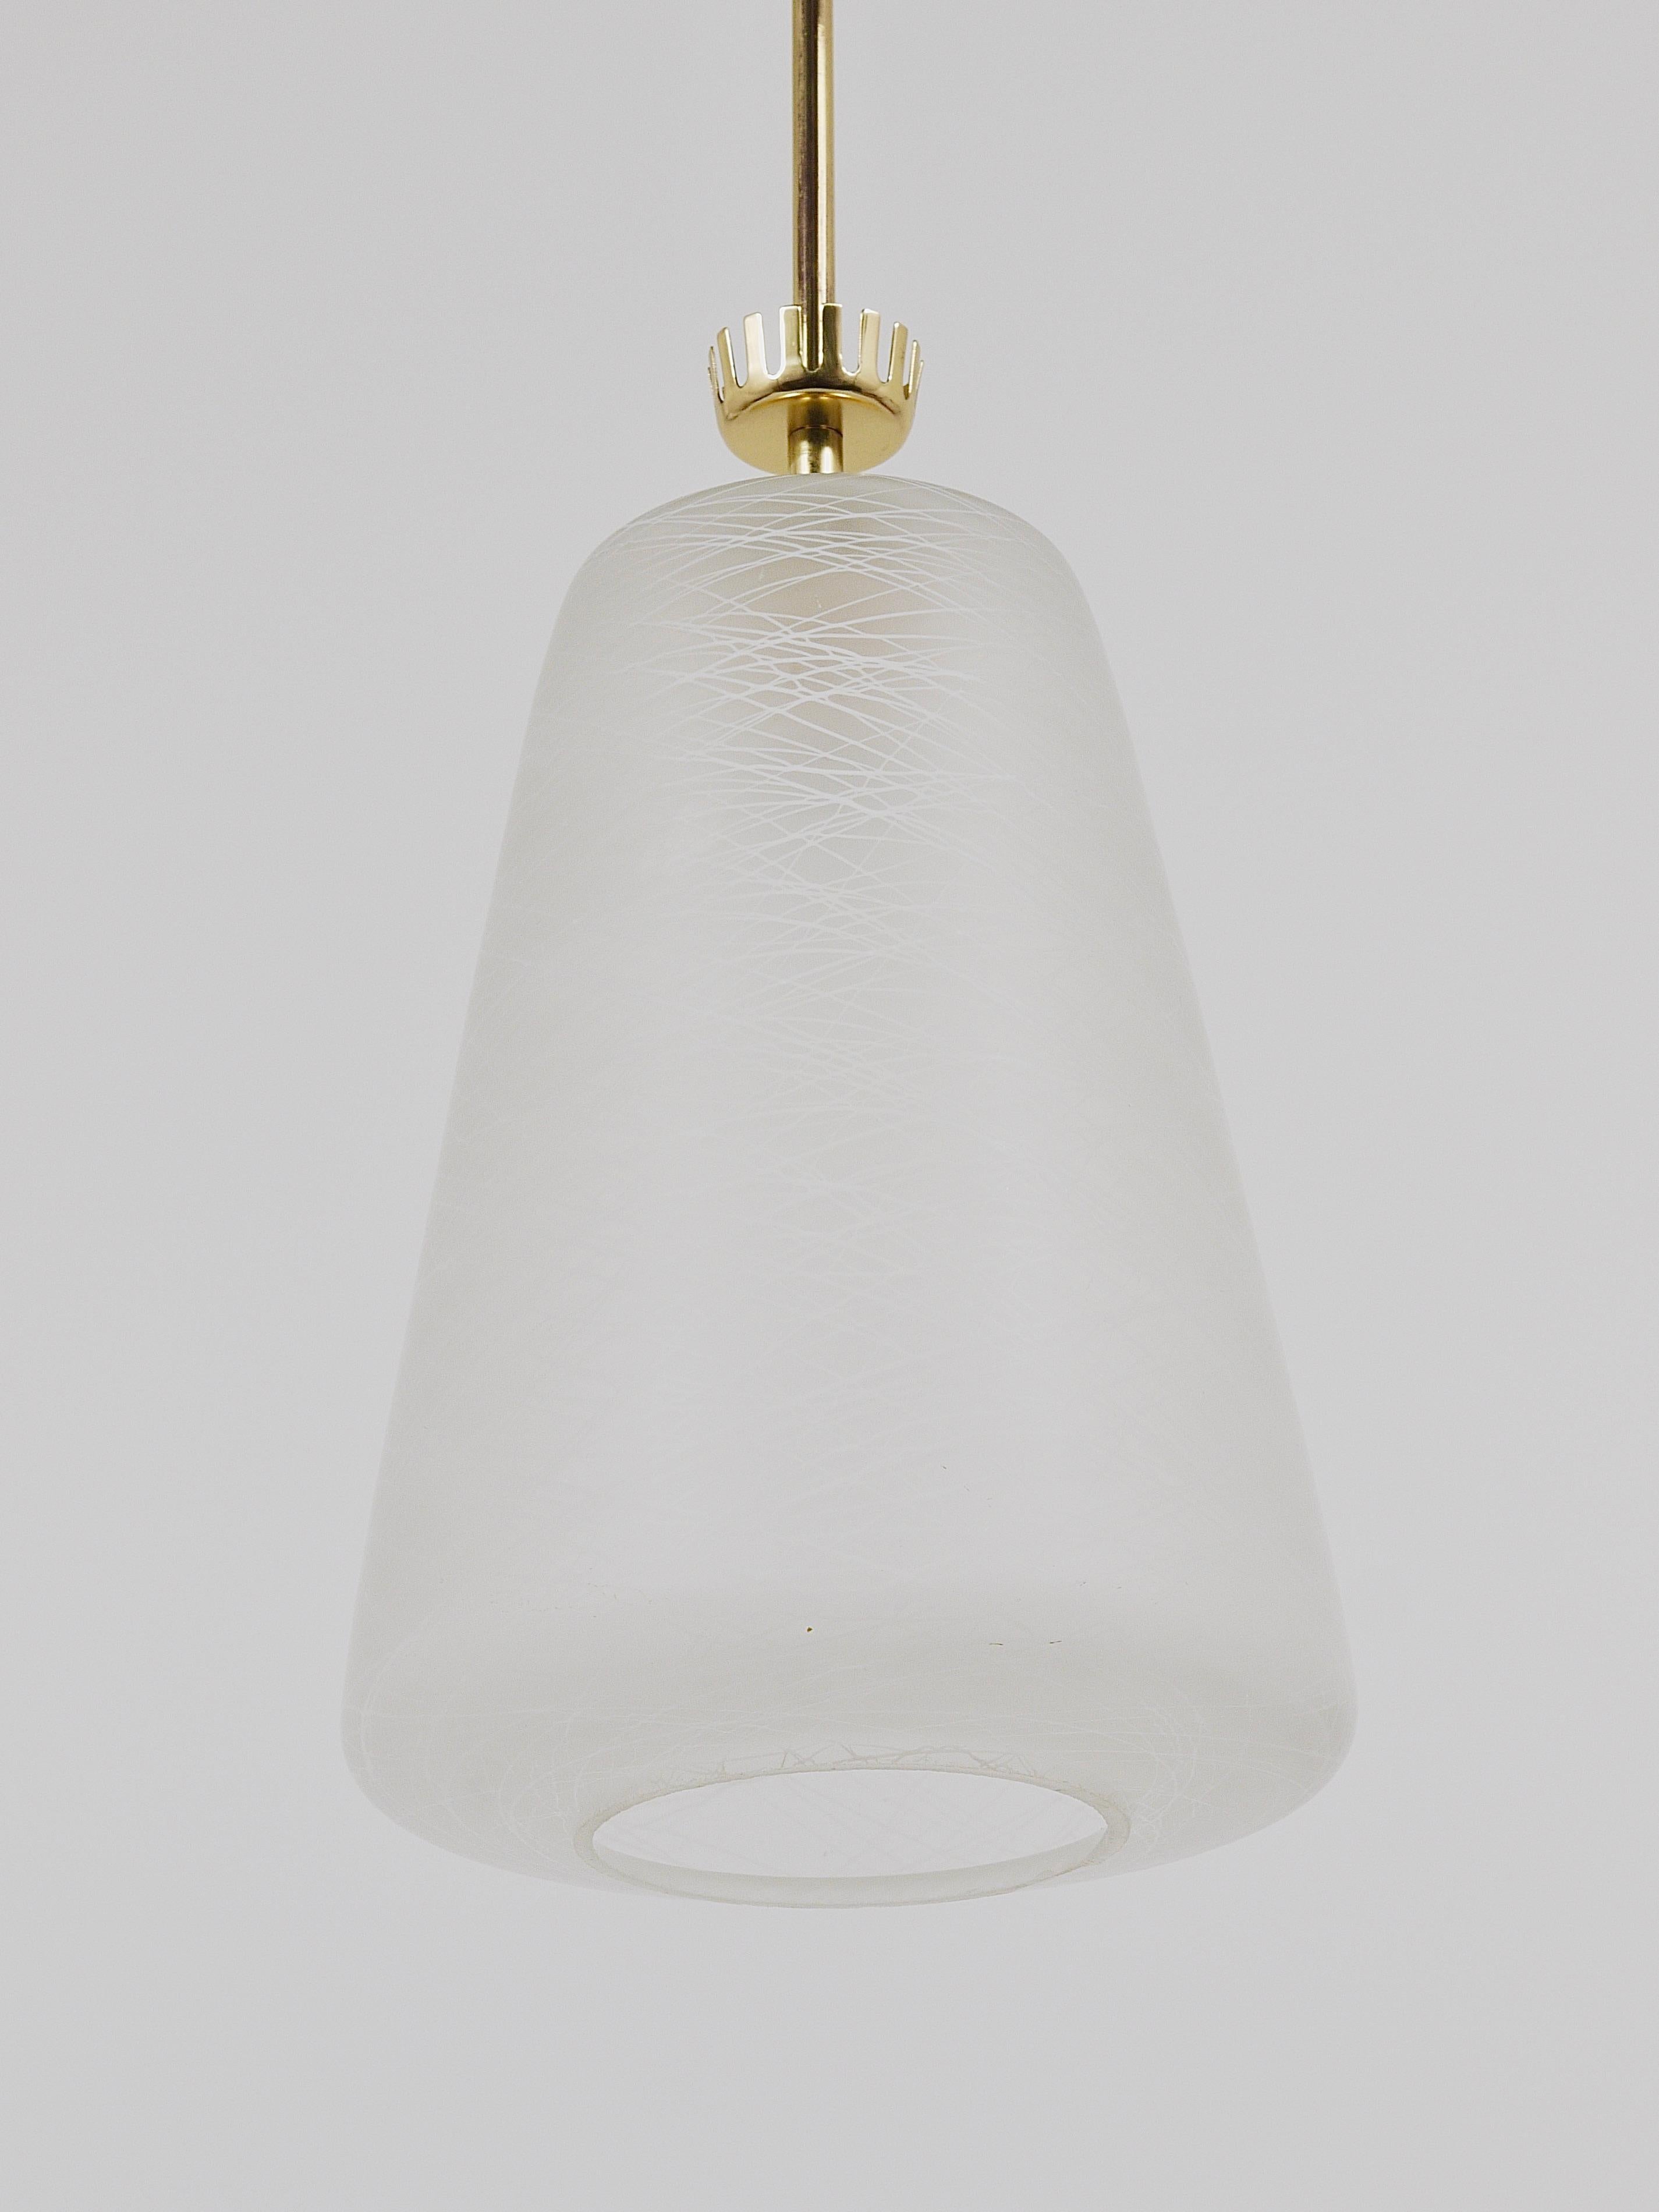 Gio Ponti Style Mid-Century Brass Crown Pendant Lamp Lantern, Italy, 1950s For Sale 4